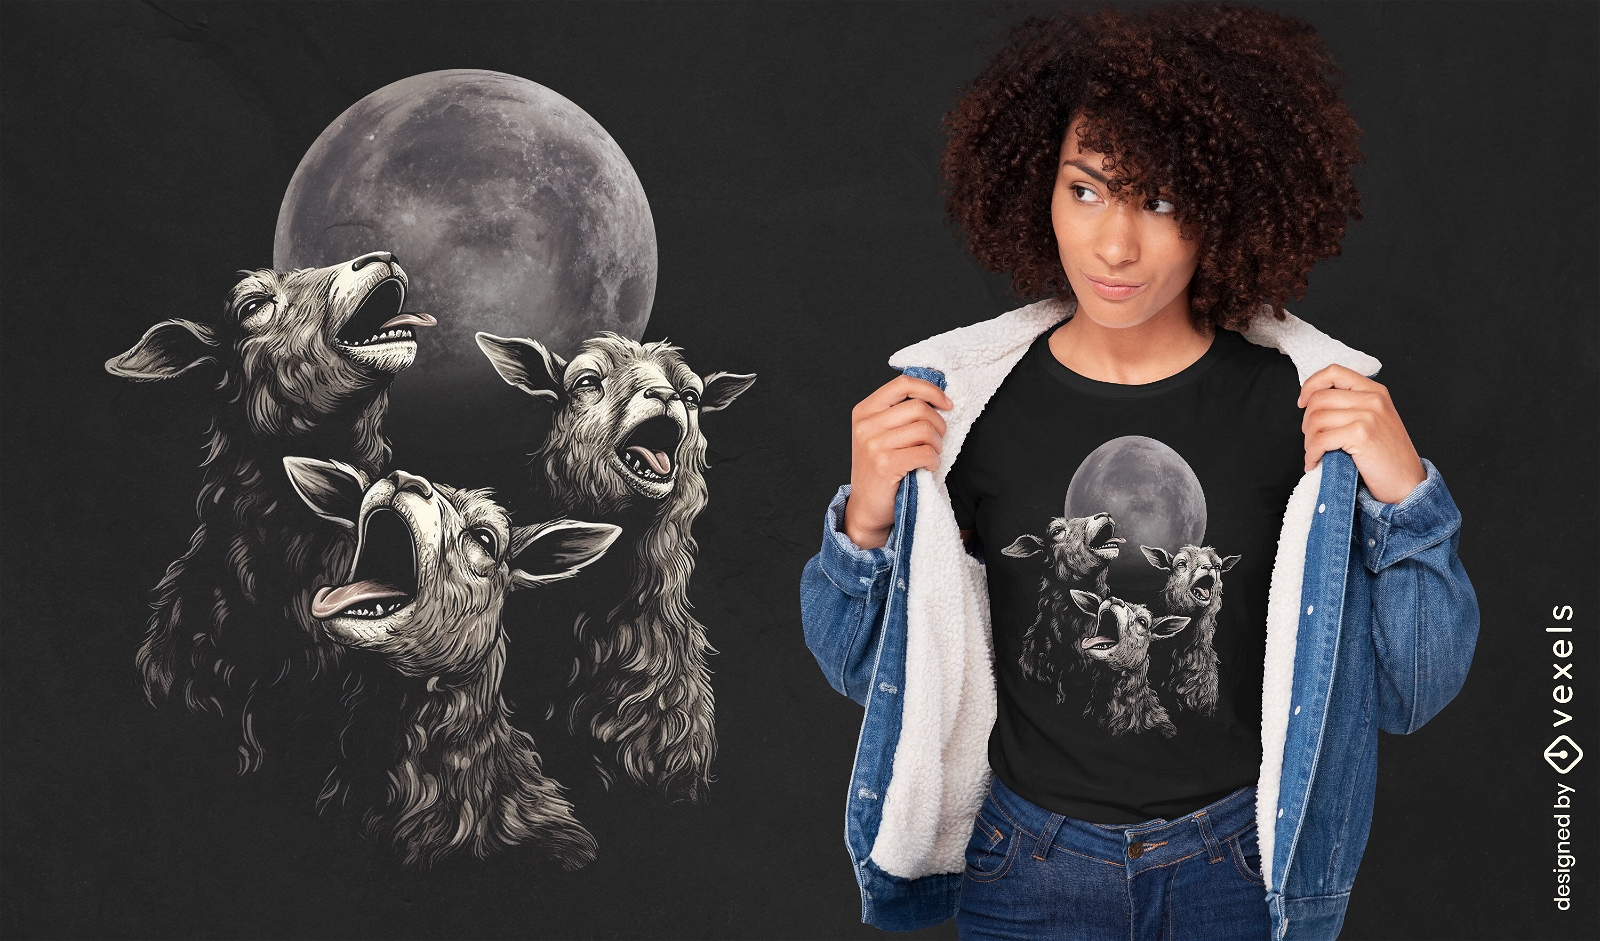 Dise?o de camiseta de ovejas aullando a la luna.